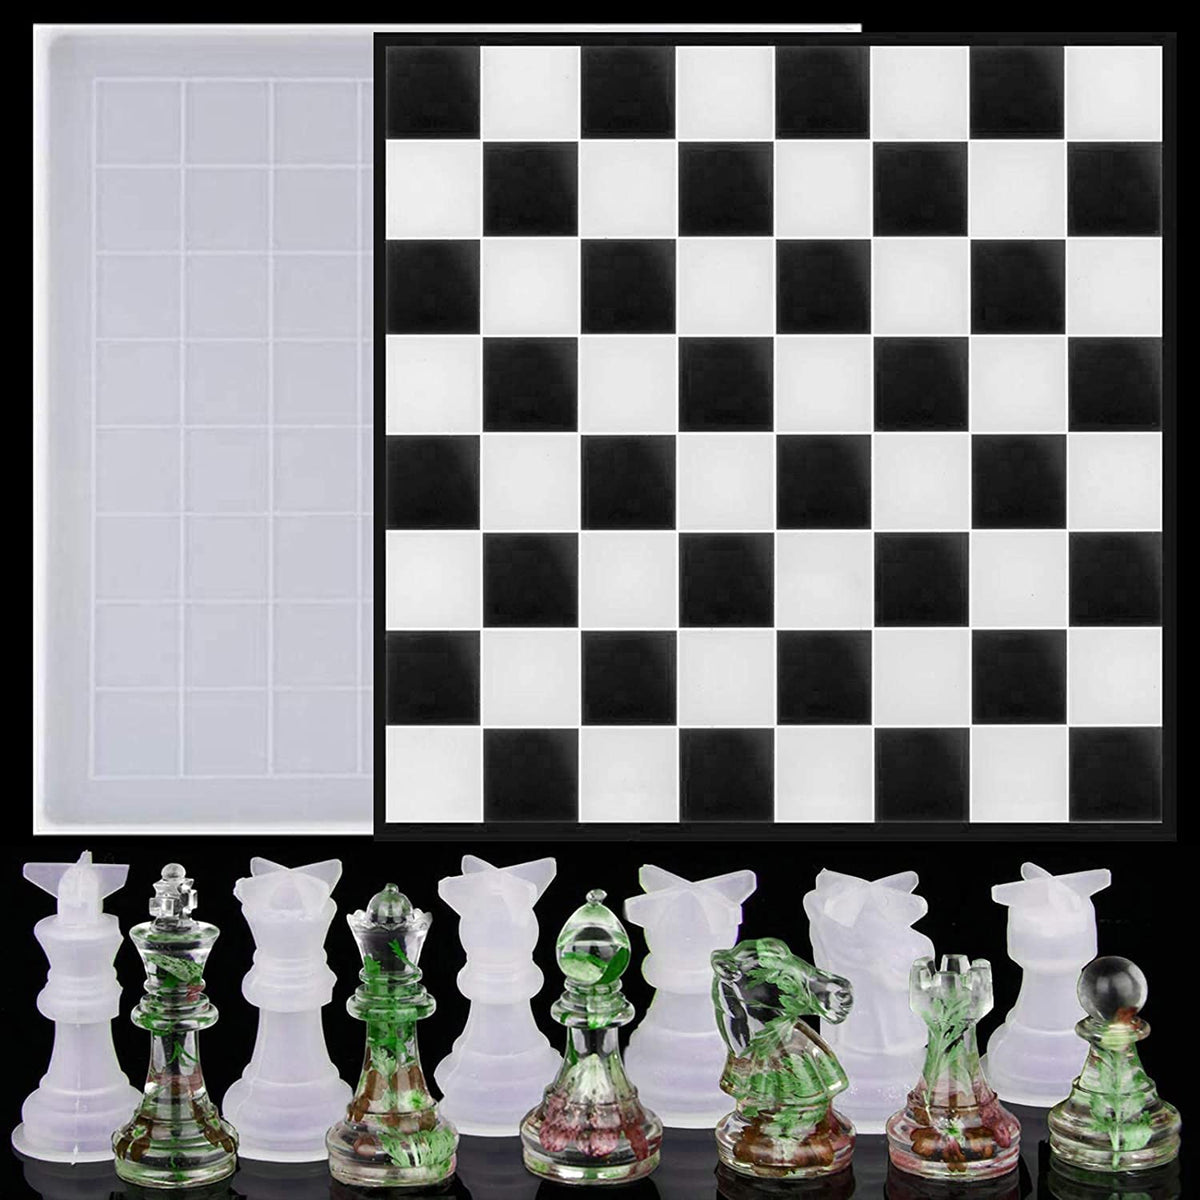 Full Sized Epoxy Resin Chess Board Mold - Make HUGE Custom Chess